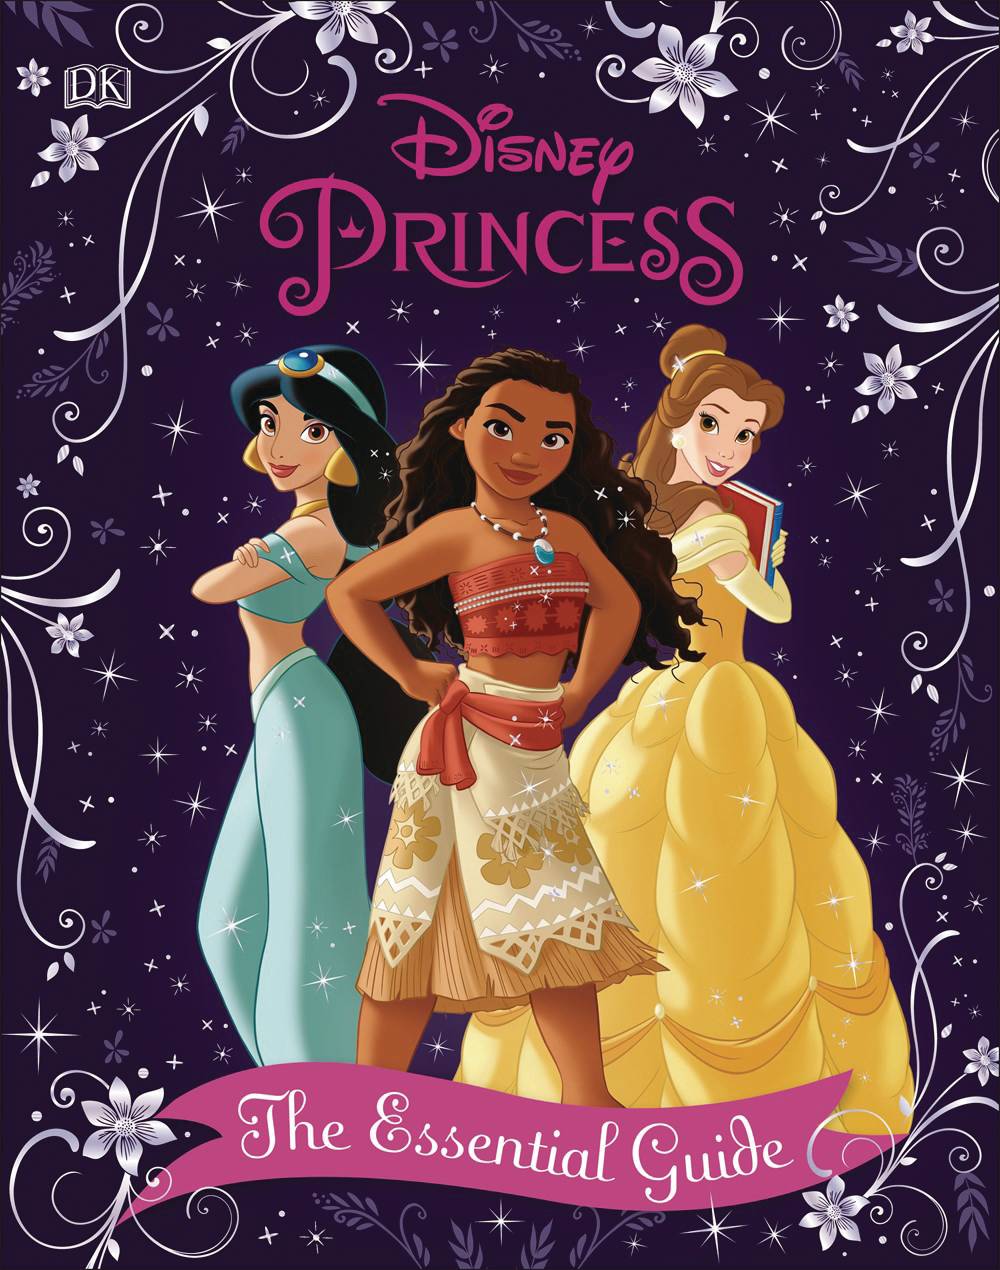 Disney Princess Essential Guide Hardcover Revised Edition